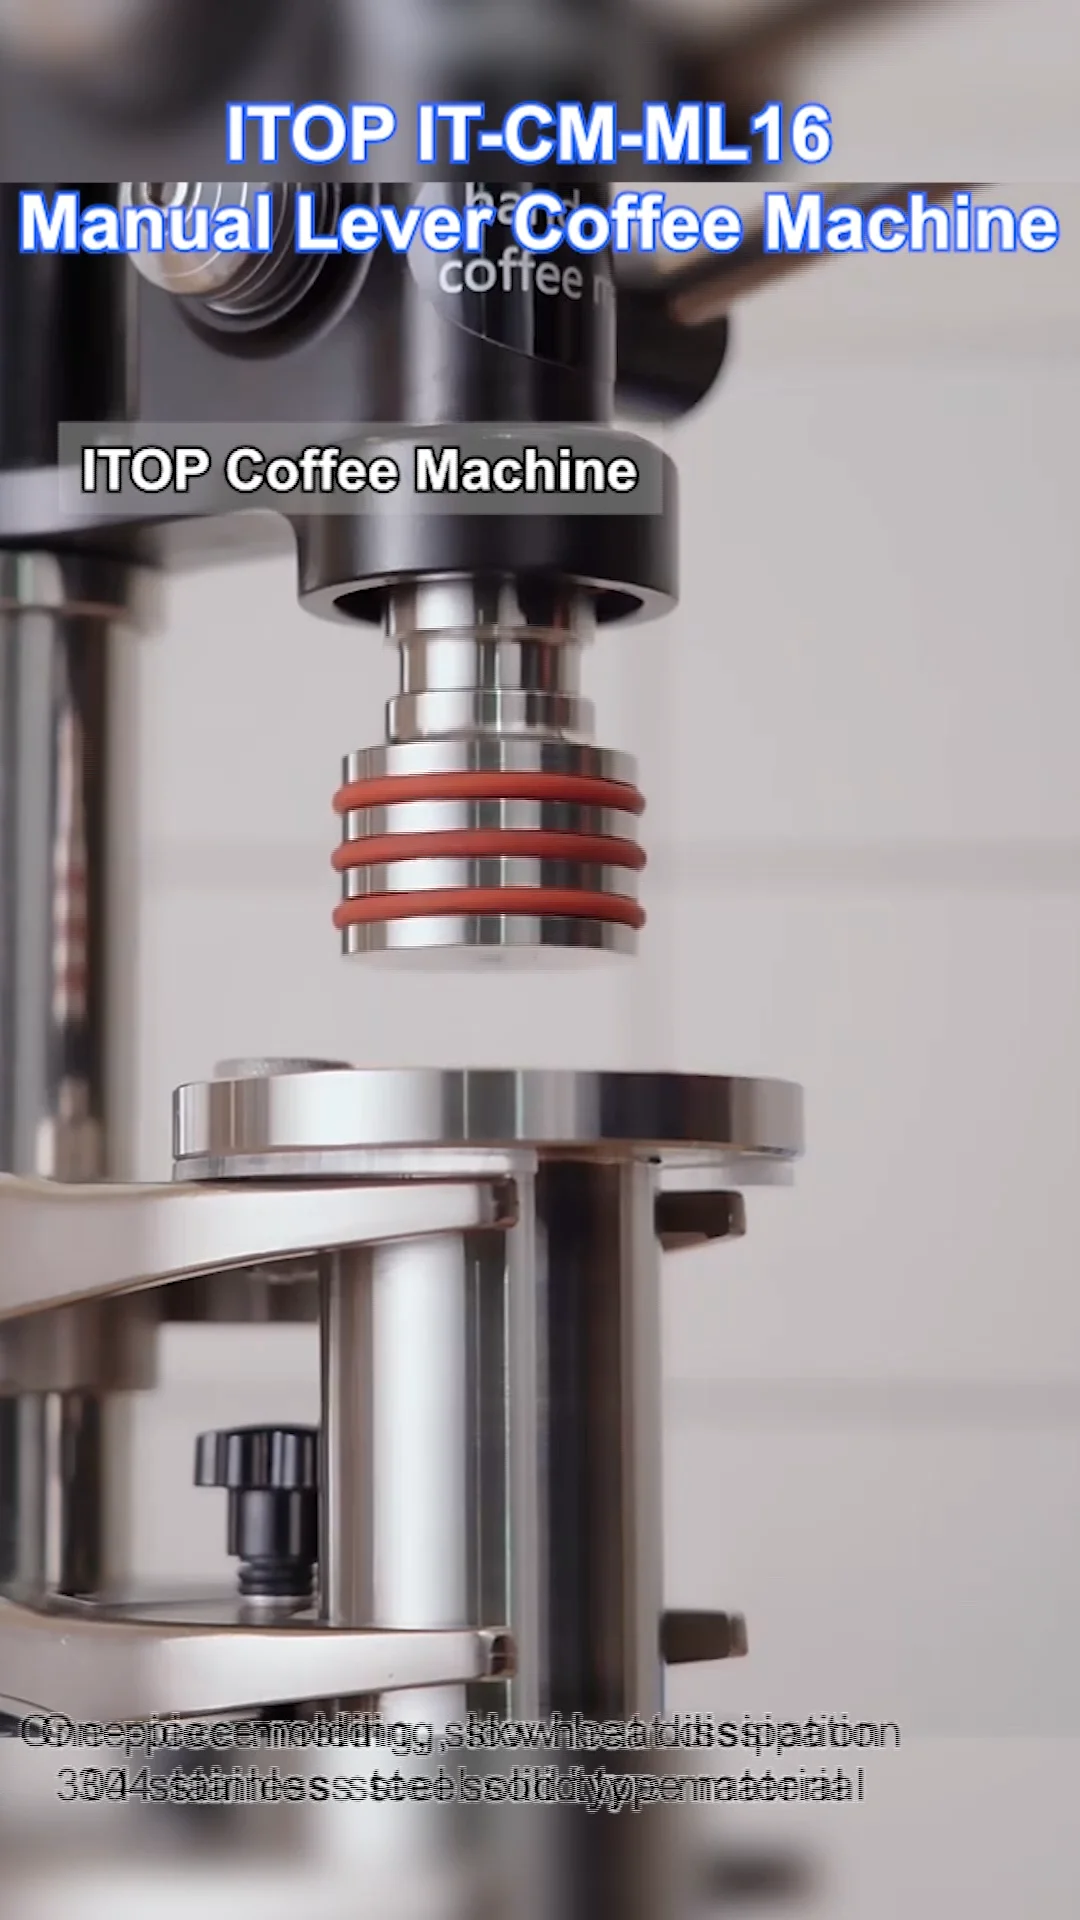 hand press espresso machine 1-16 bar